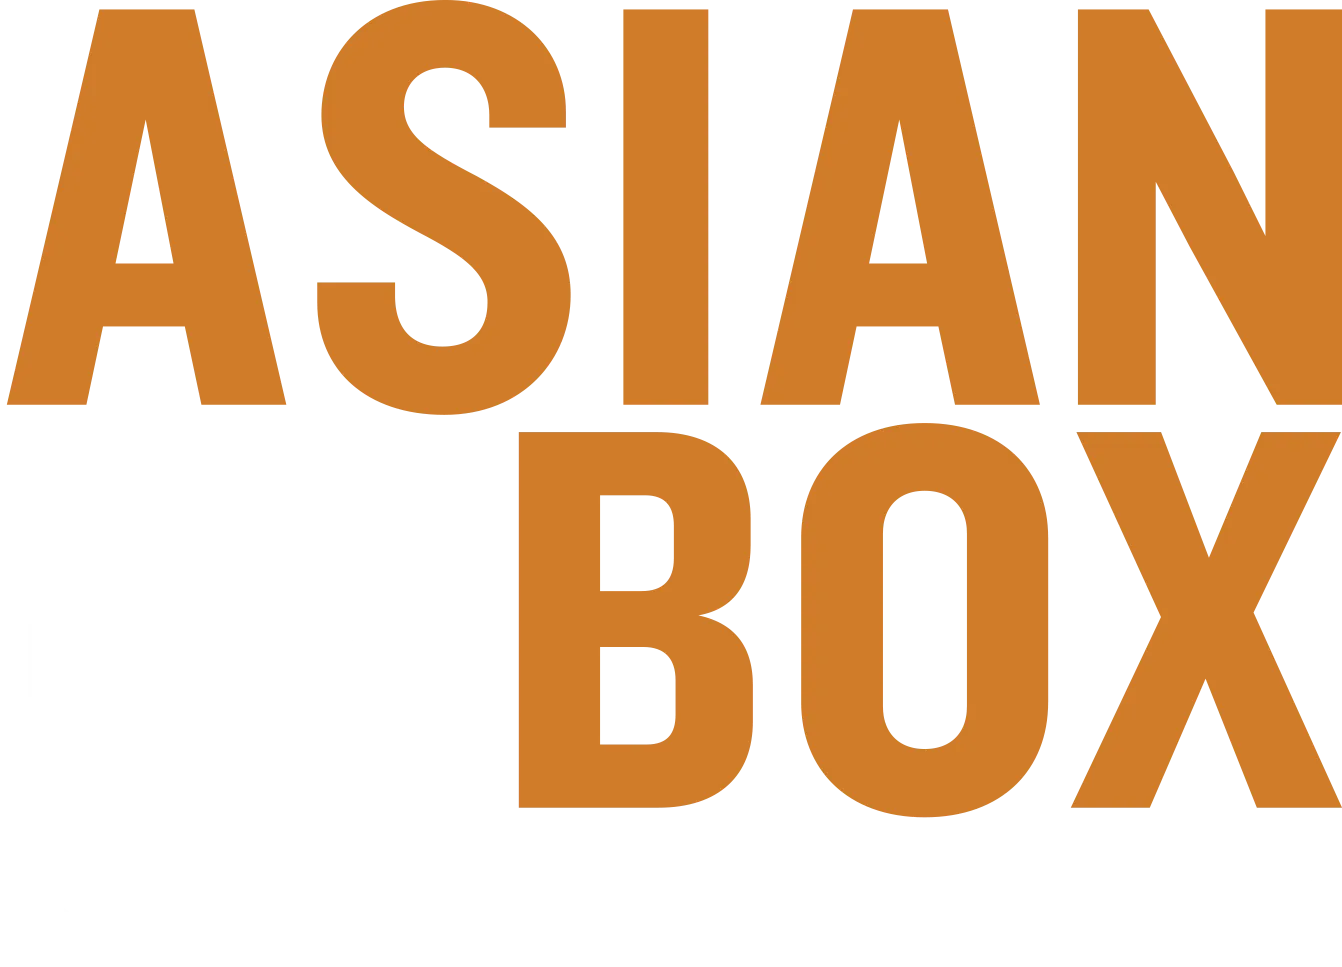 asianbox.com